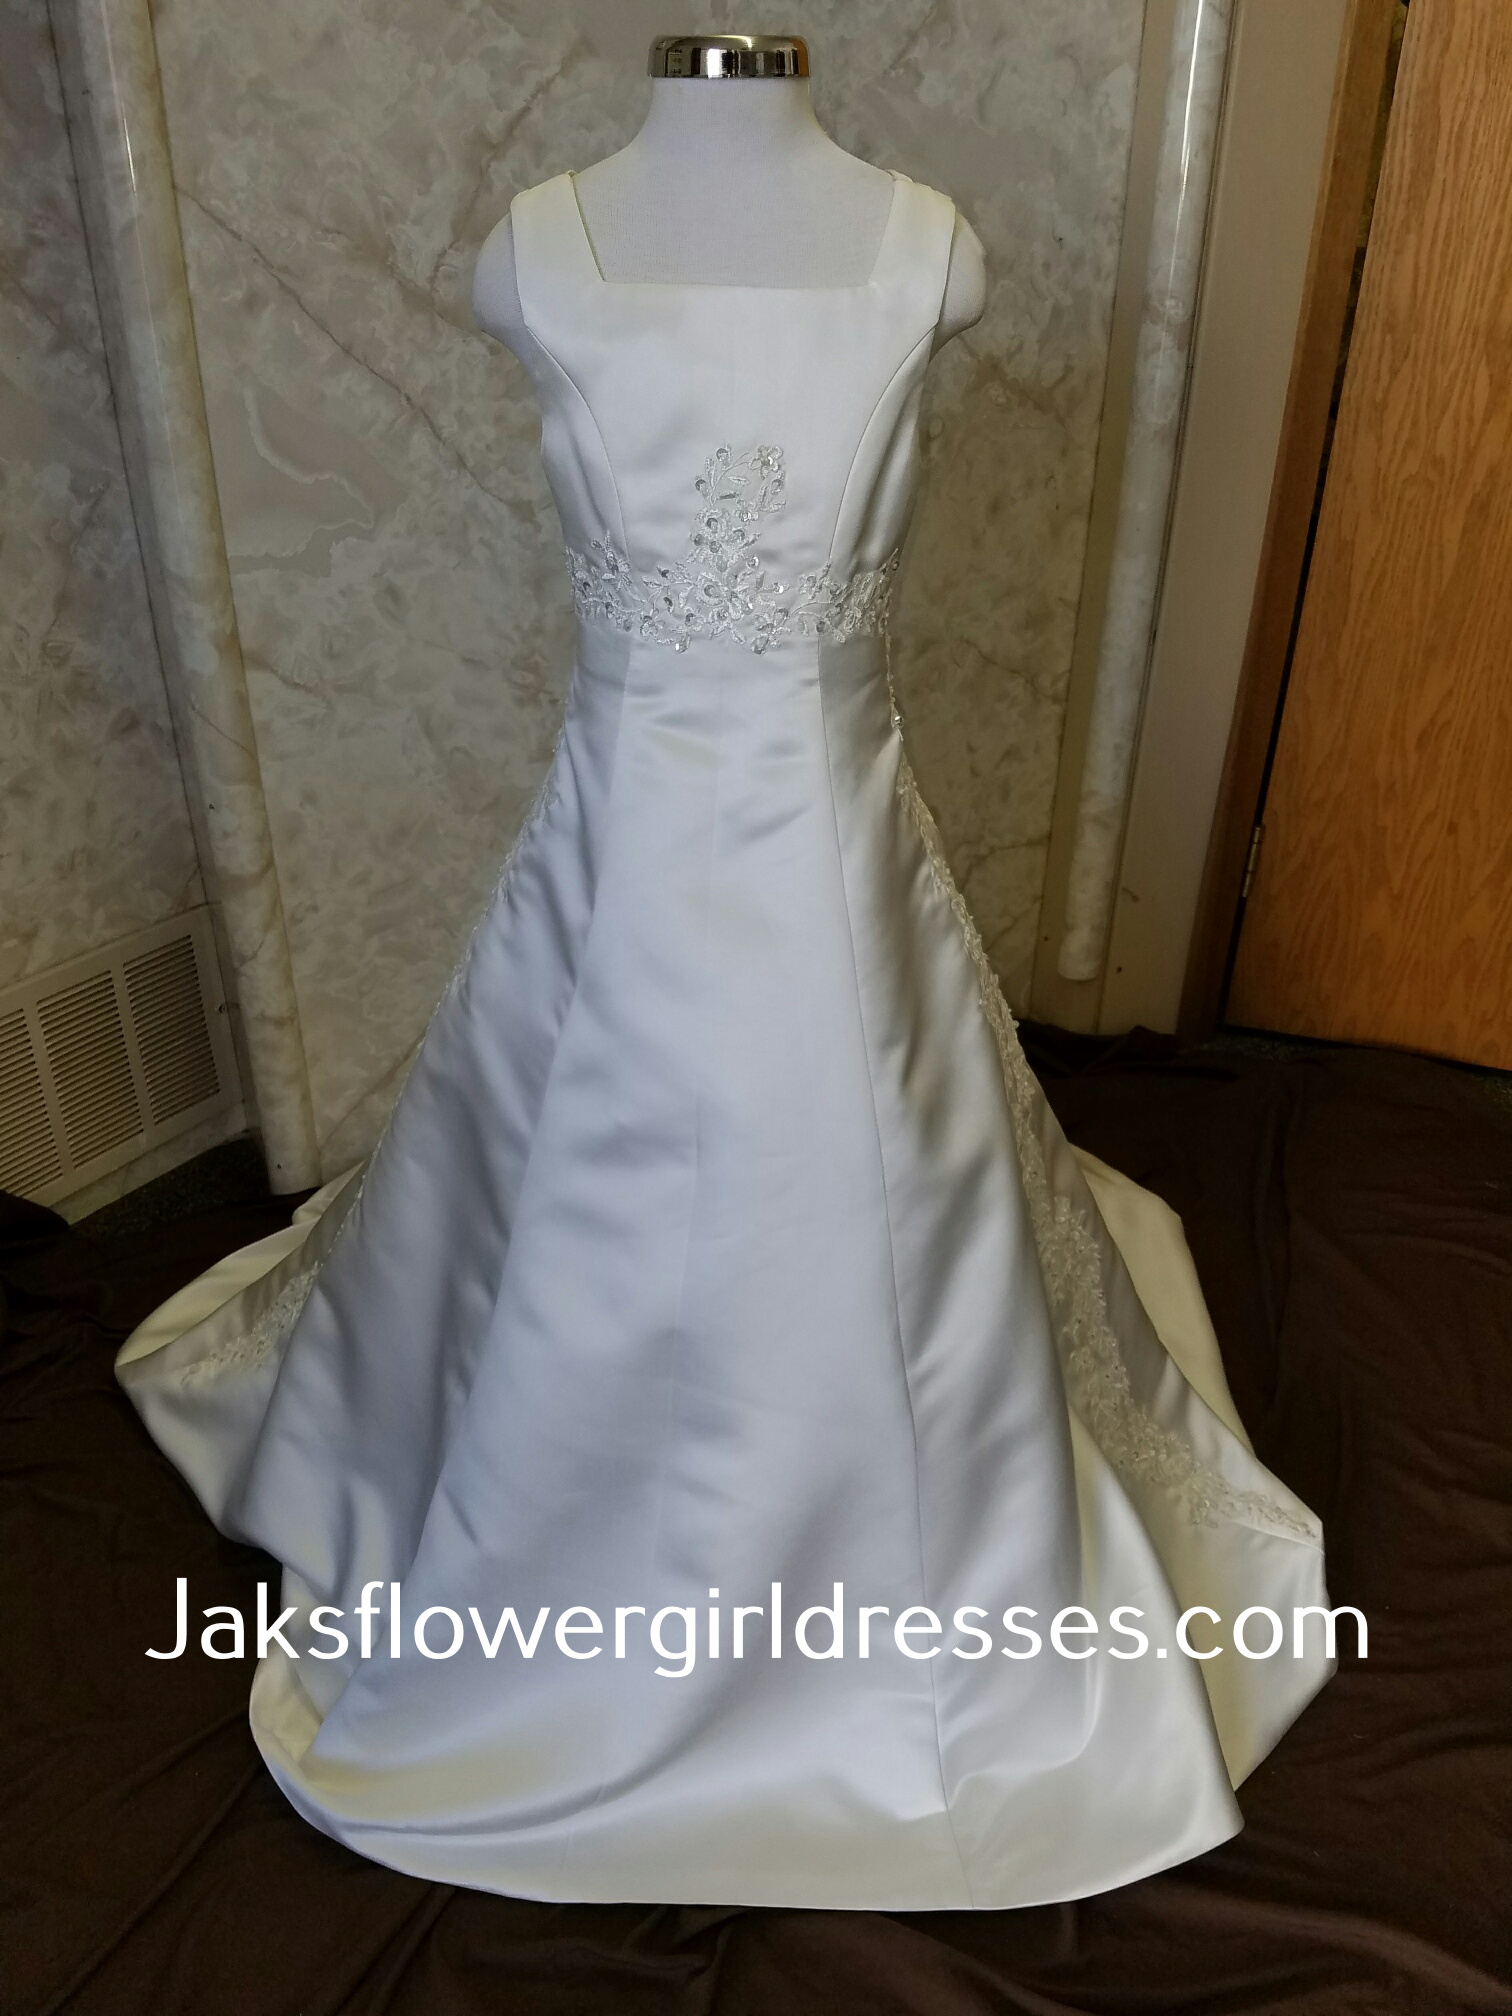 Miniature bride gown dress train